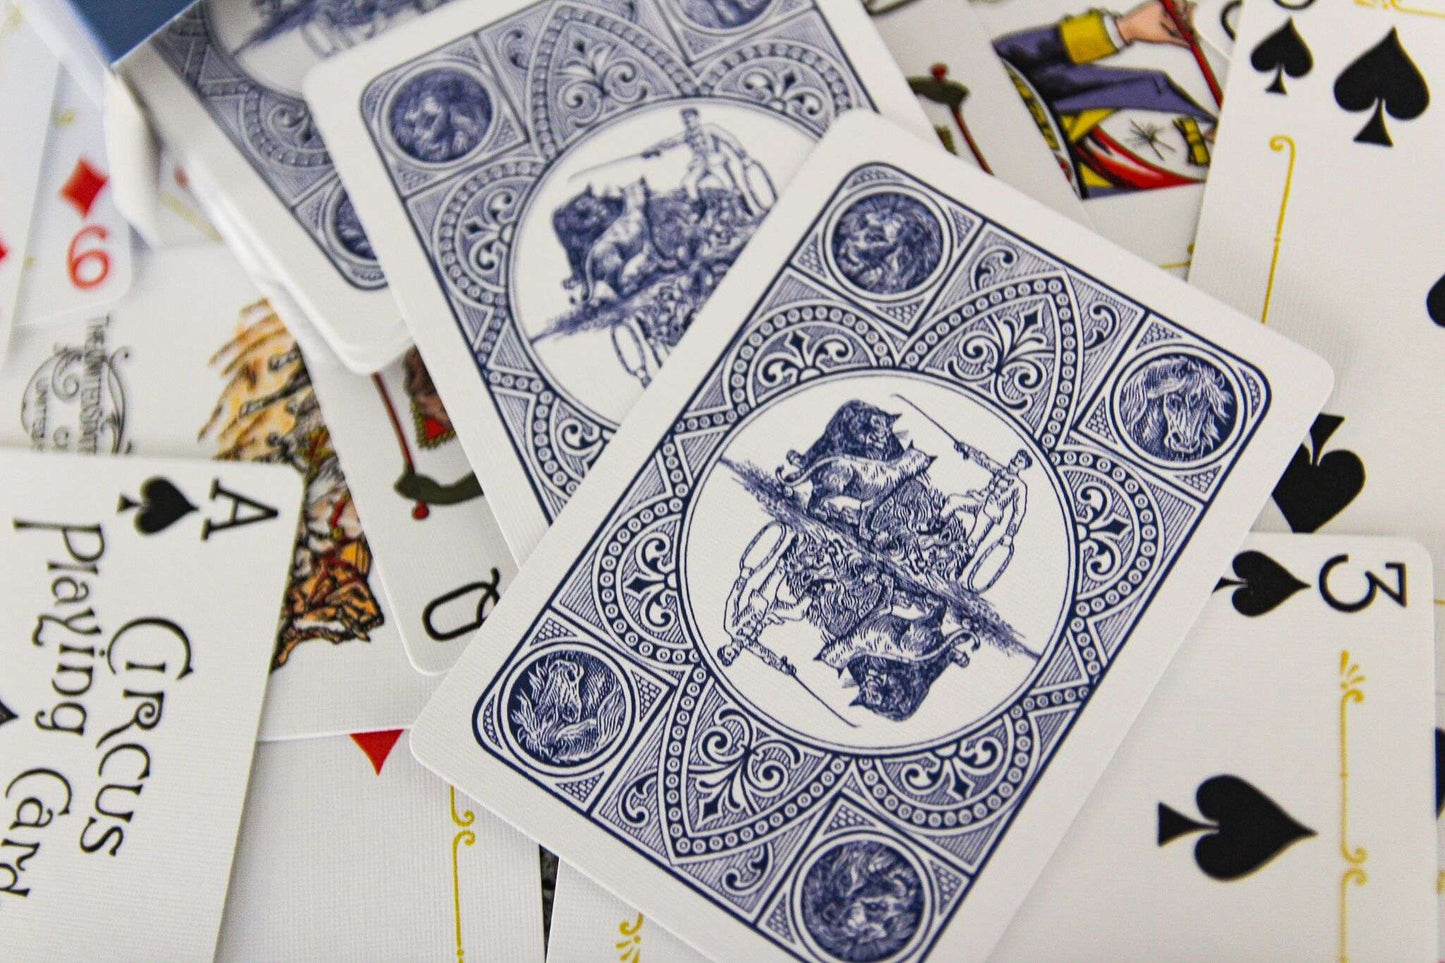 PlayingCardDecks.com-Circus Reproduction Playing Cards USPCC